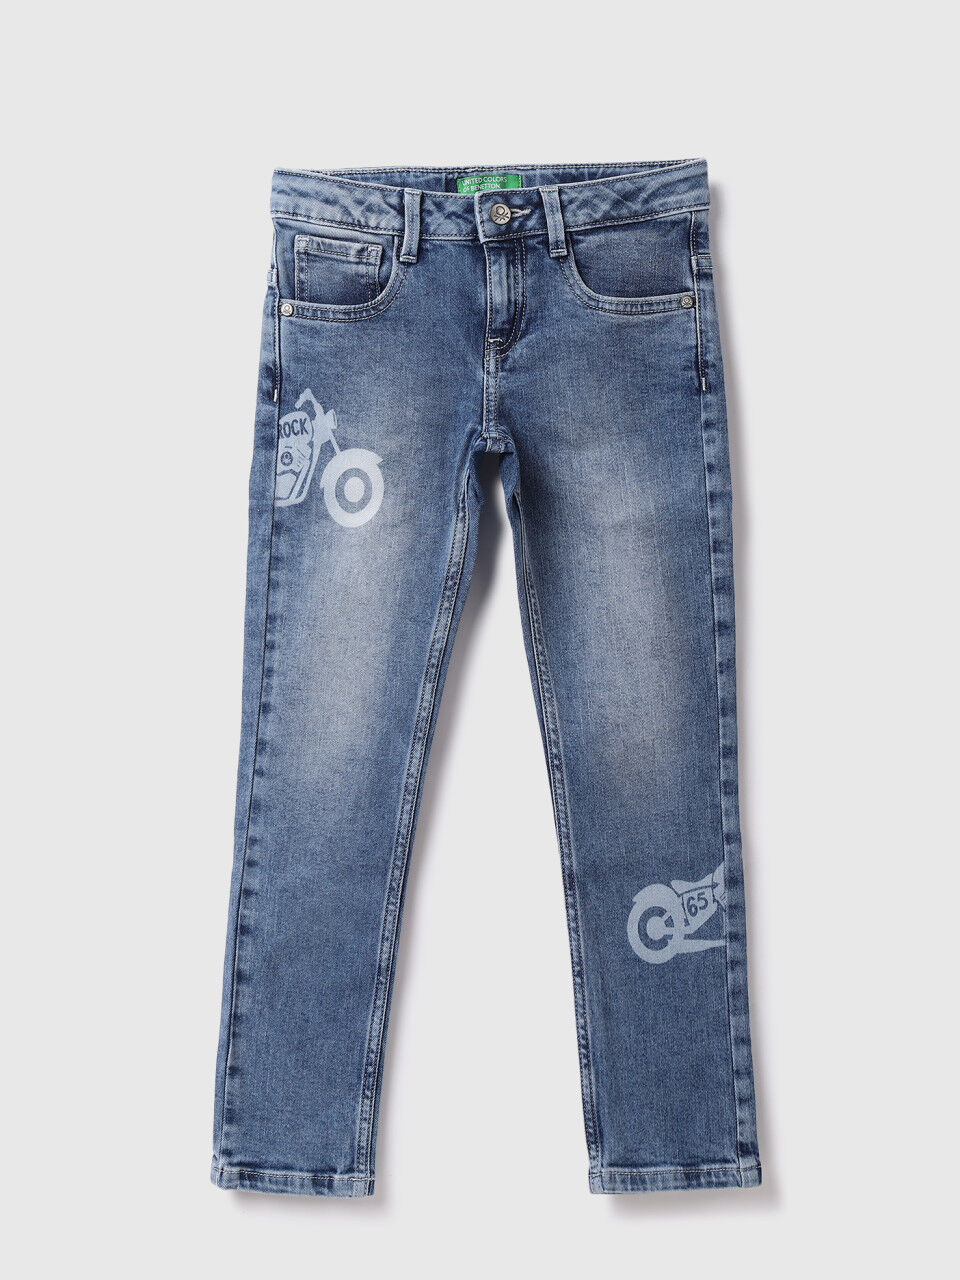 Cotton Blend Solid Regular Length Boys Jeans